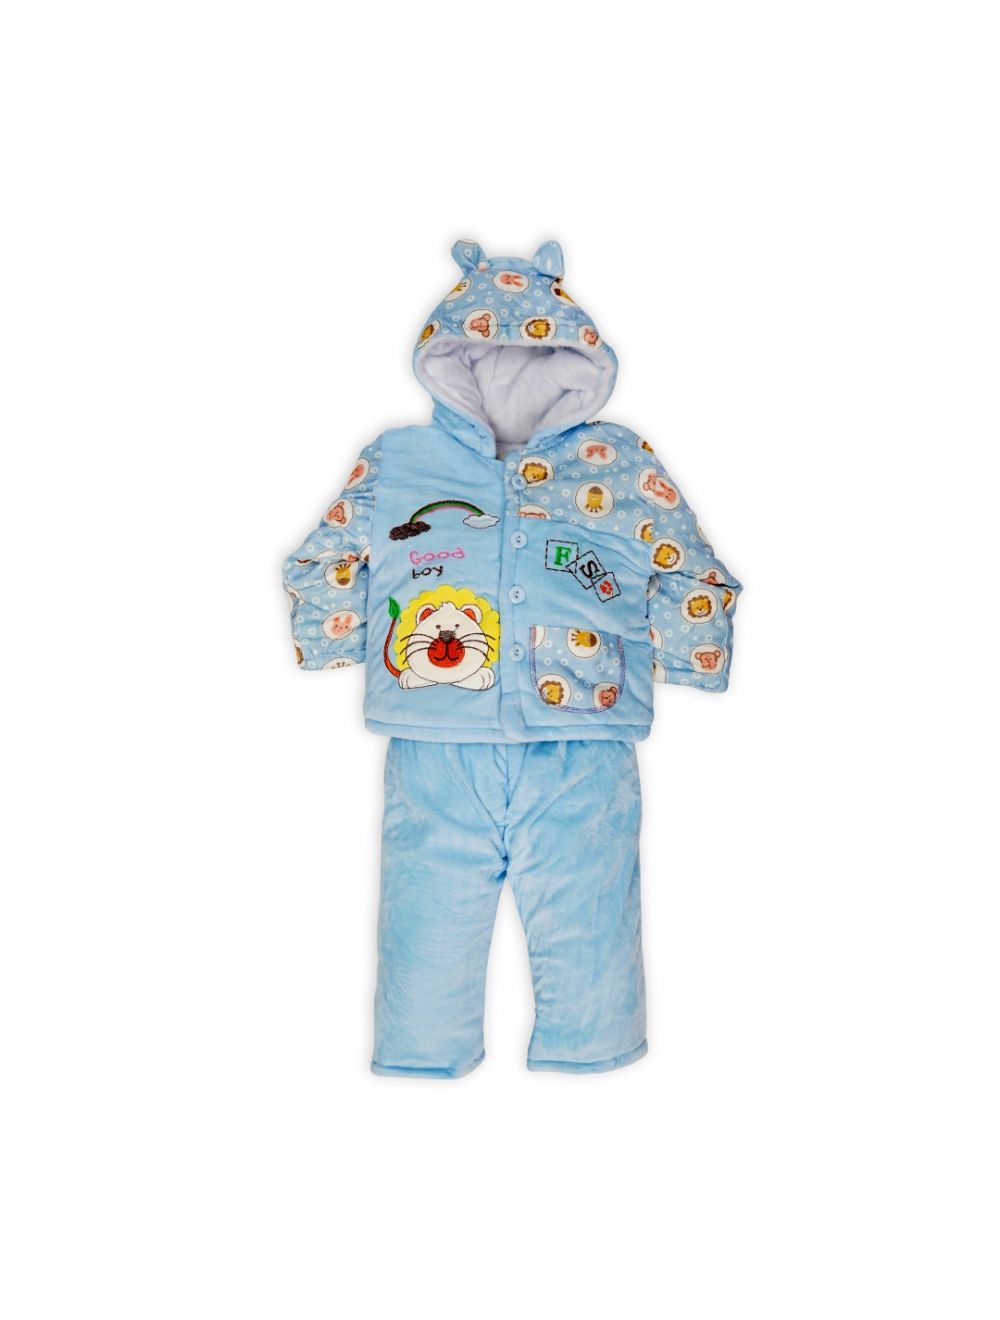 Little Spark Baby Velvet Body Suit Blue Lion (12-18 Months)